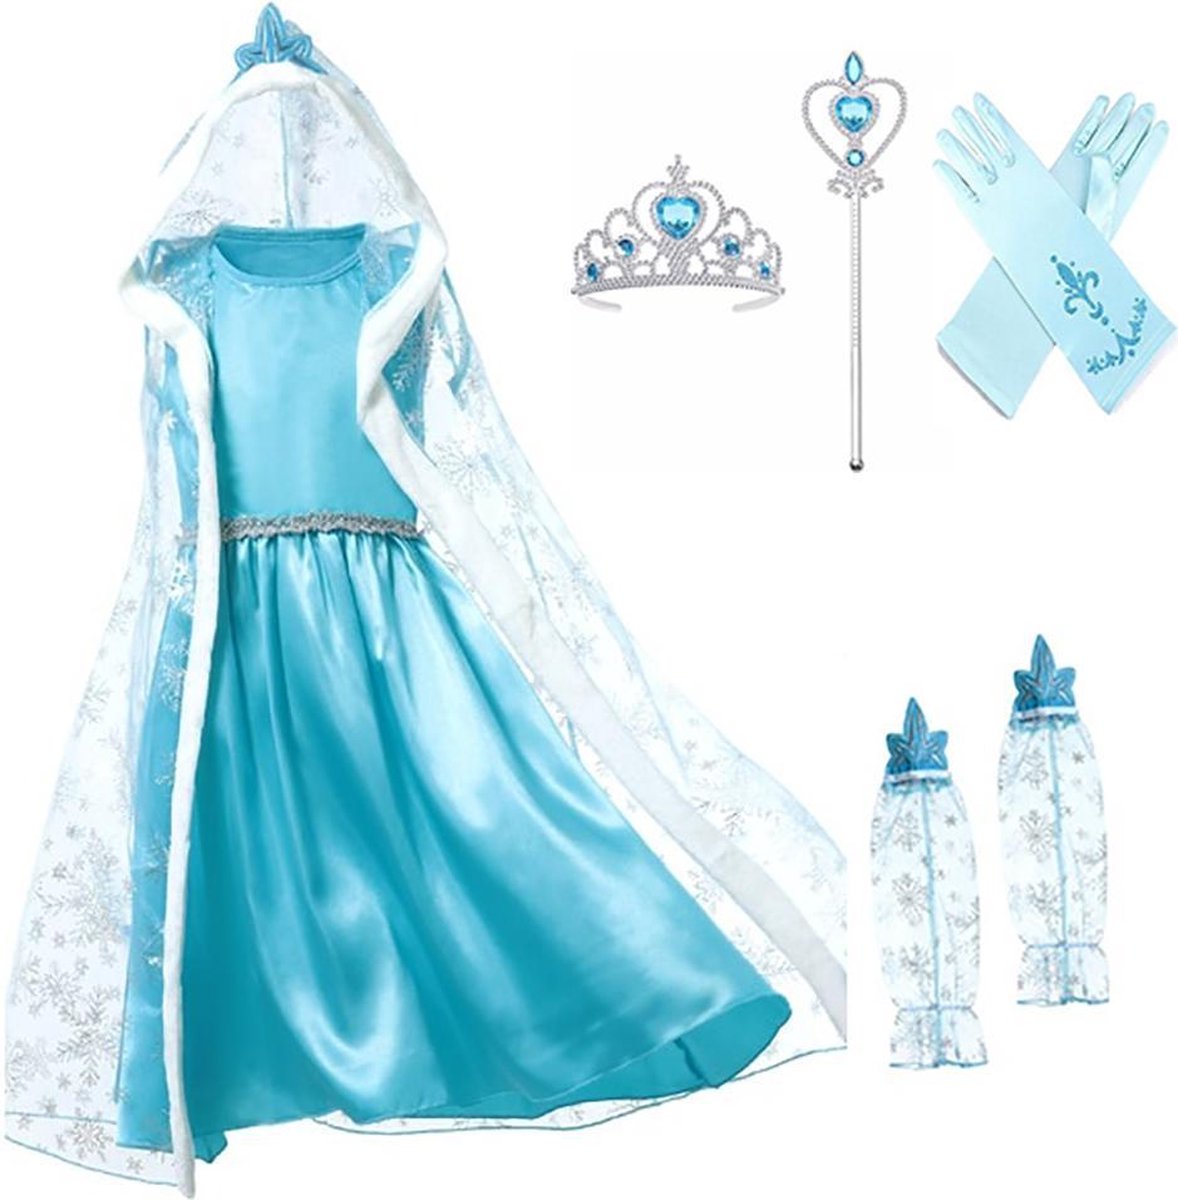 Het Betere Merk - Prinsessenjurk meisje - Blauwe jurk - maat 104/110 (110) - losse cape + mouwen - Tiara - Toverstaf prinses - Handschoenen - Carnavalskleding meisje - Verkleedkleren Kind - Cadeau meisje - Verjaardag - Prinsessen speelgoed